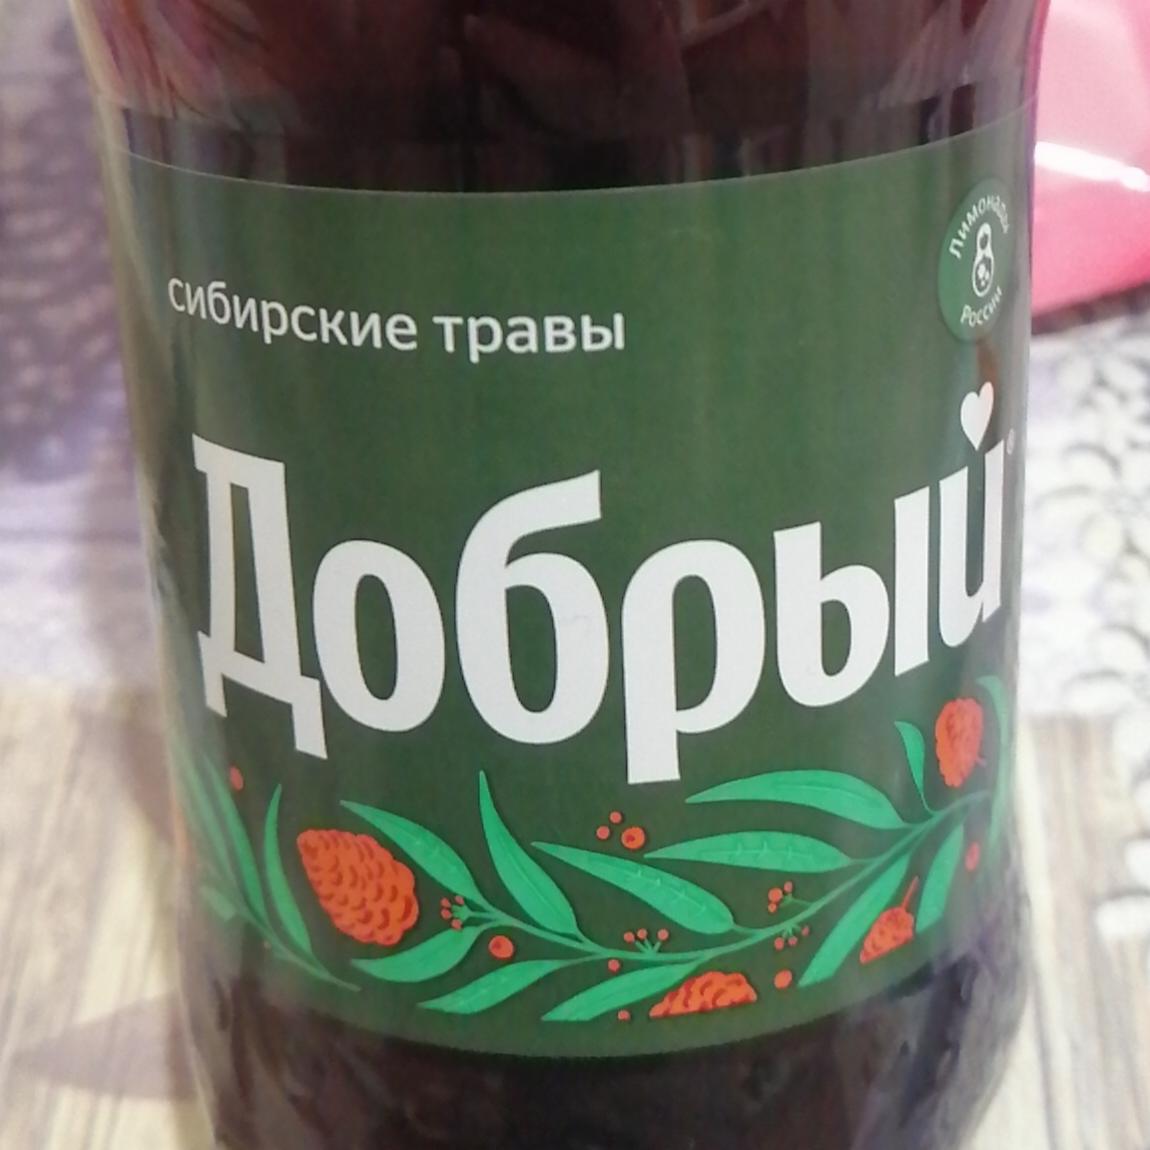 Фото - напиток сибирские травы Добрый